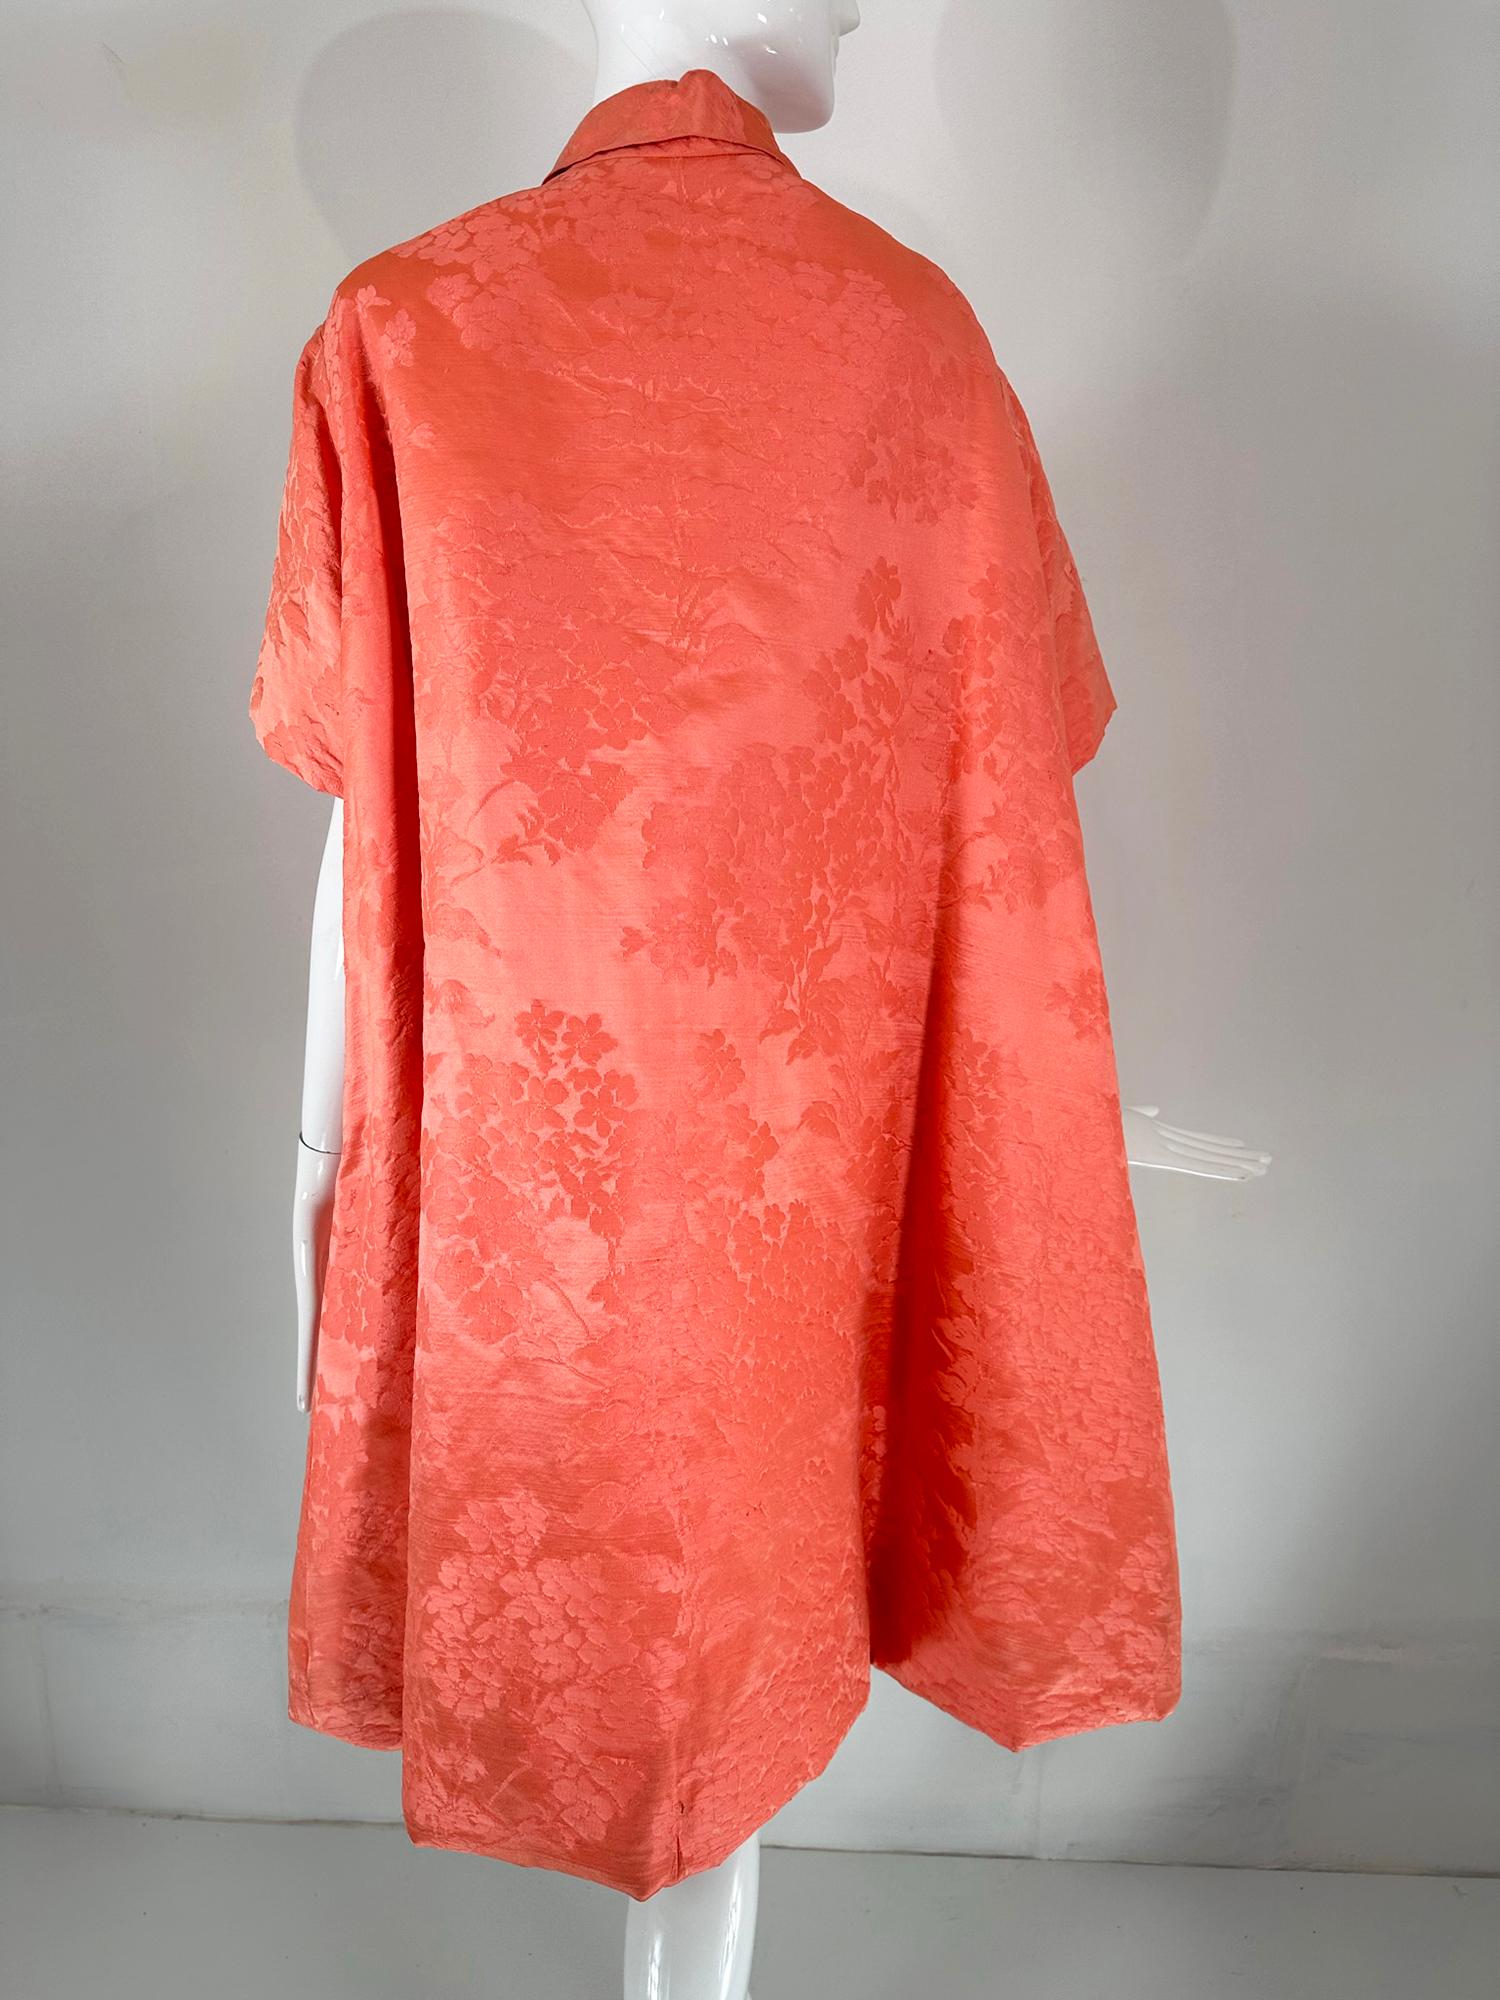 Lanvin Castello Haute Couture Coral Silk Brocade Coat & Dress Ensemble 1950s For Sale 6